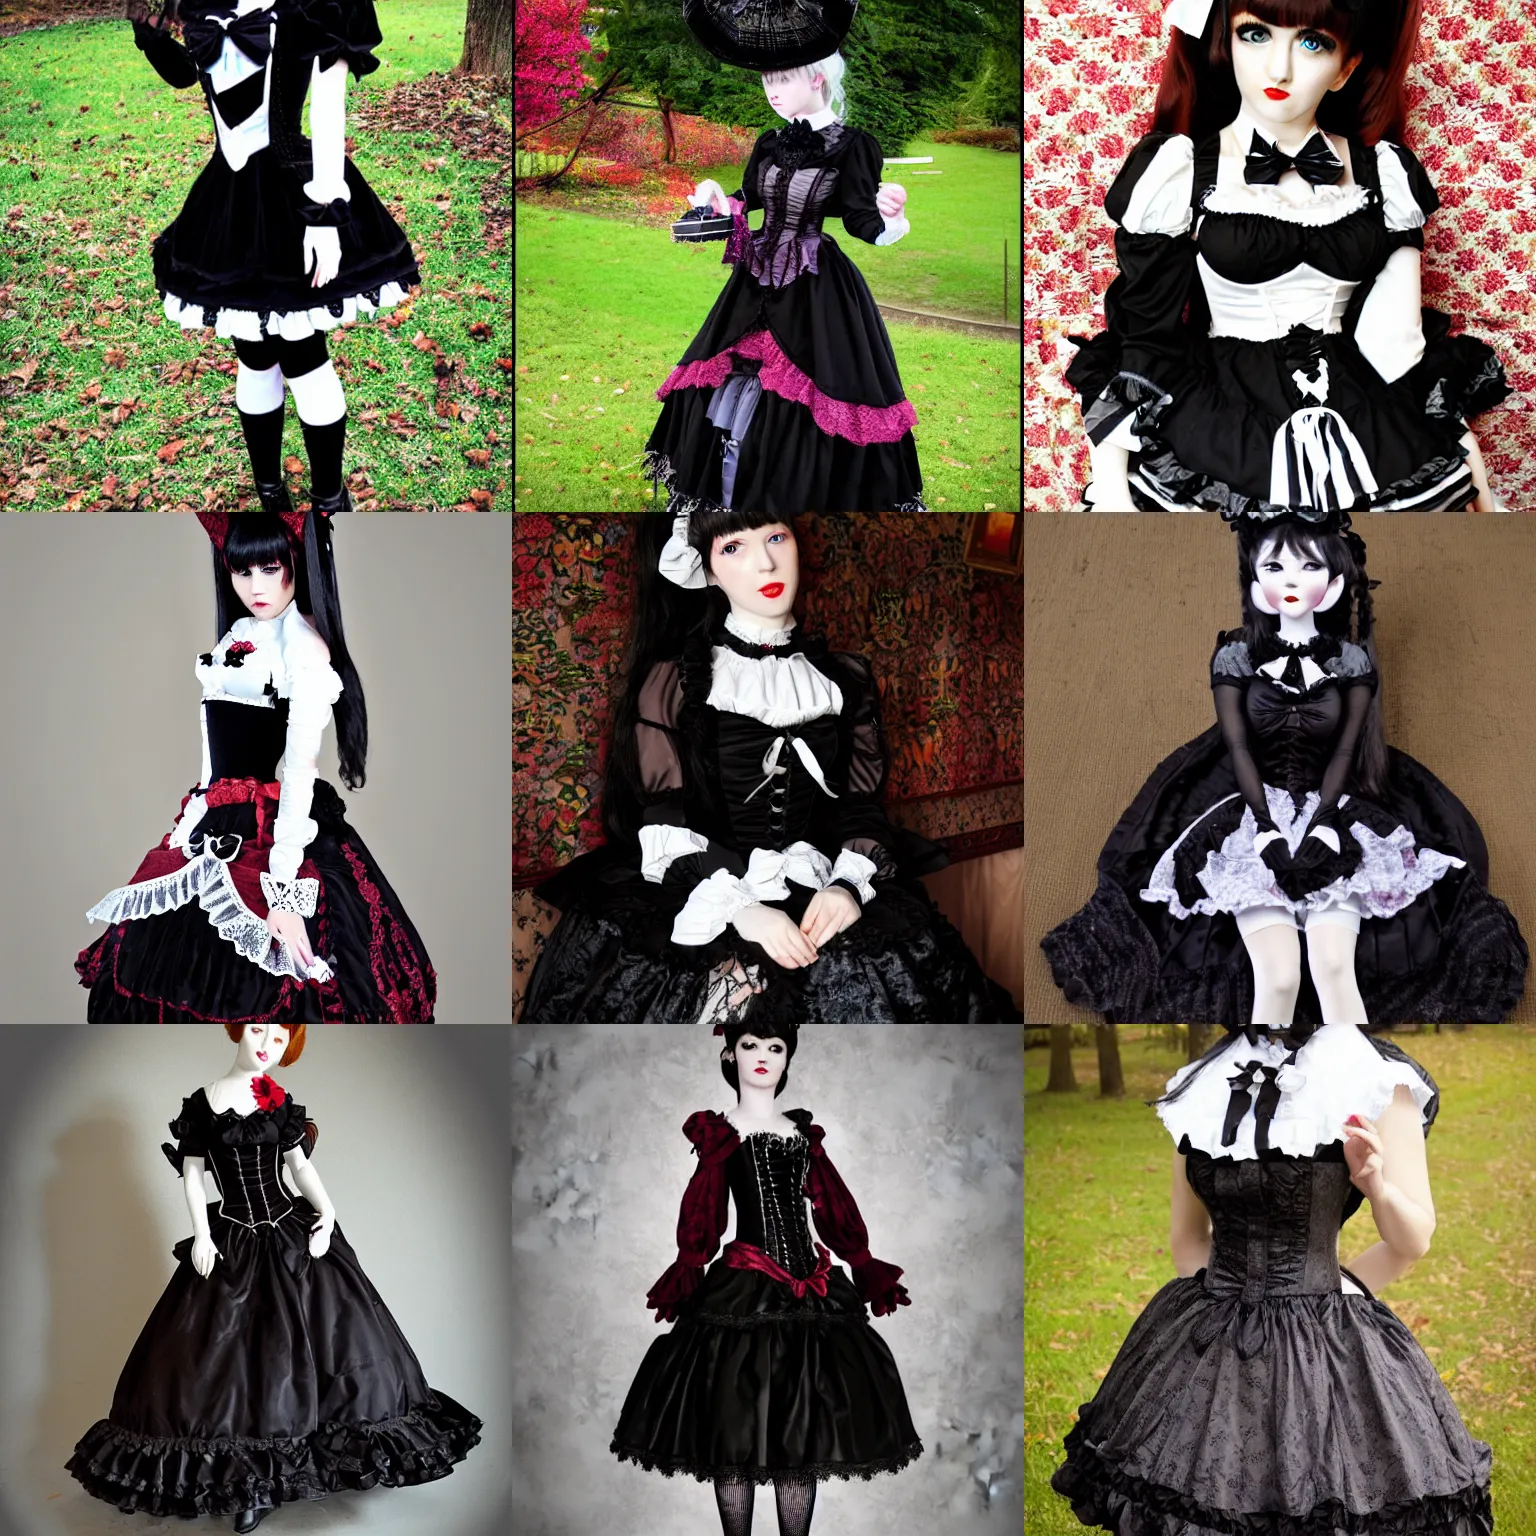 Prompt: plush woman wearing gothic lolita dress